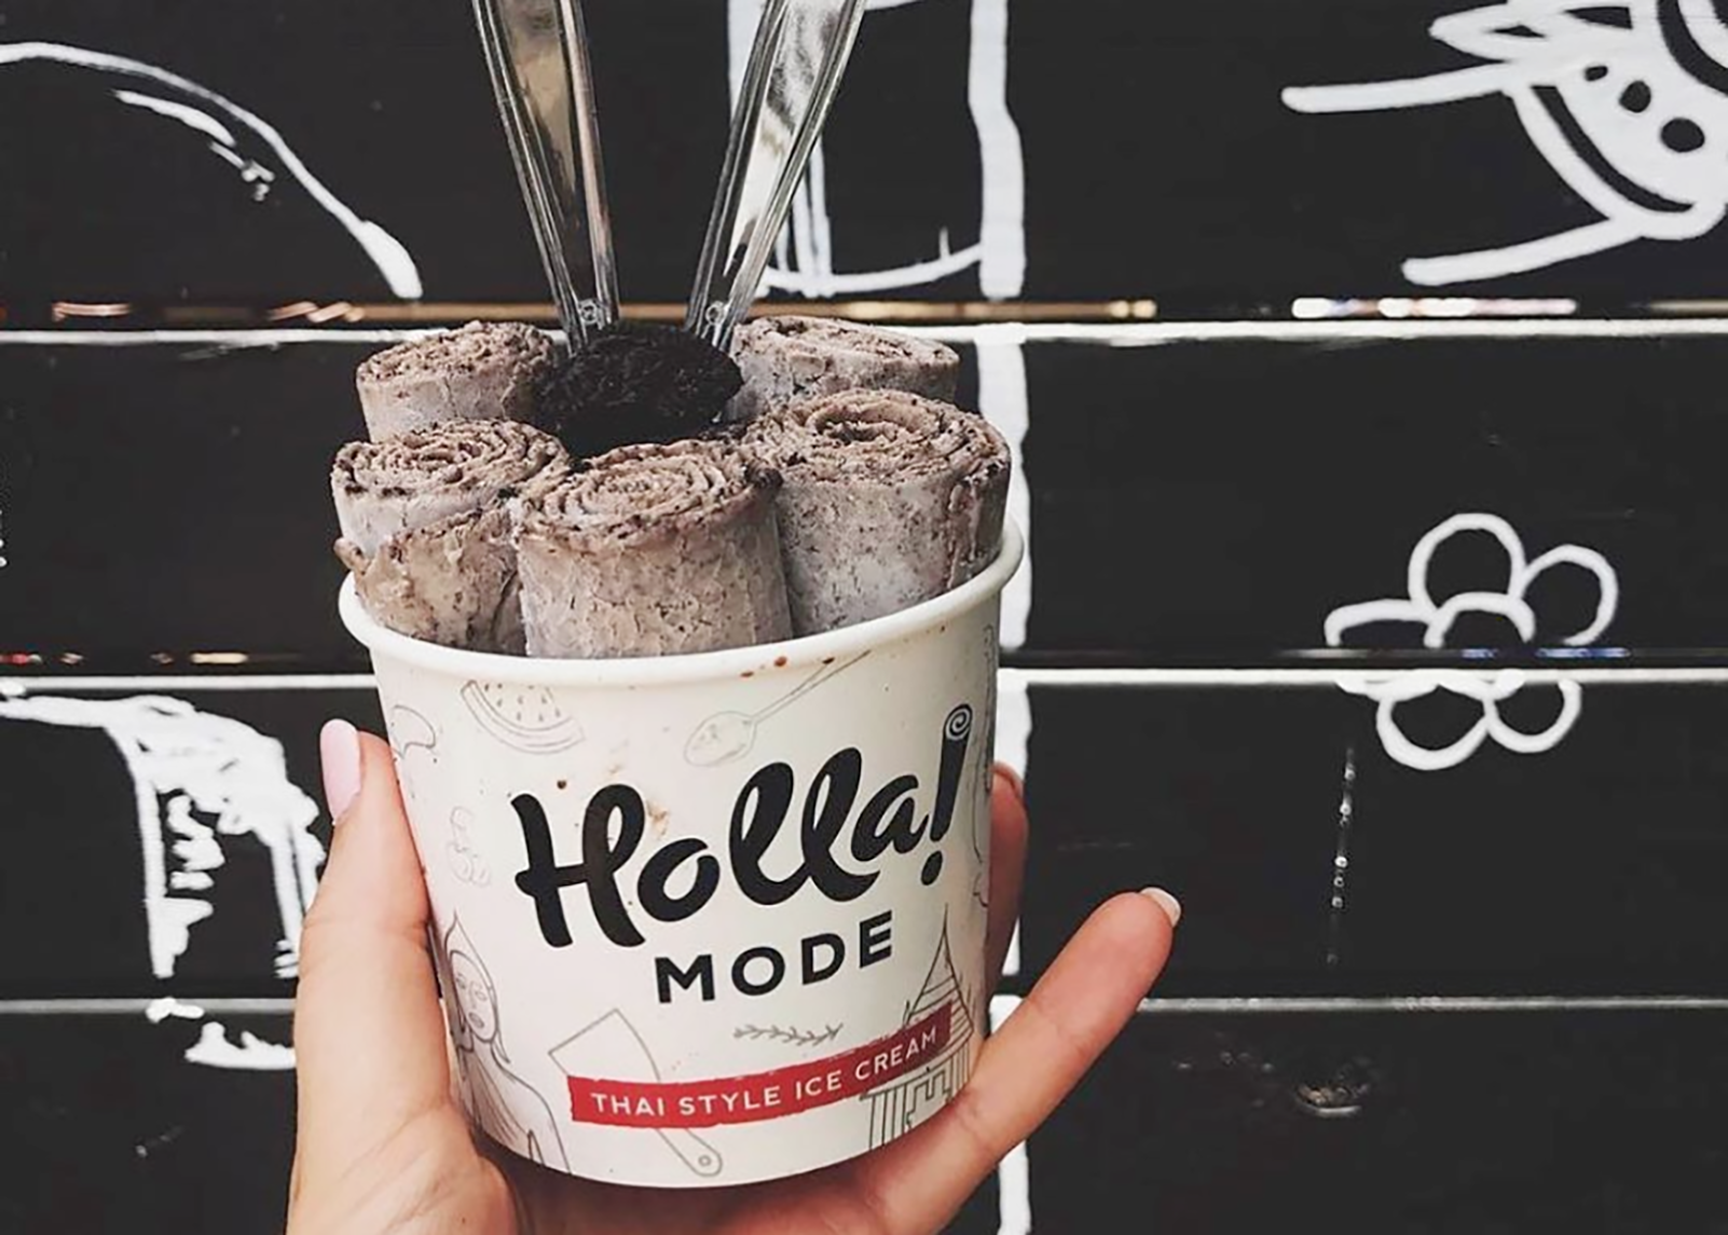 Holla Mode ice cream